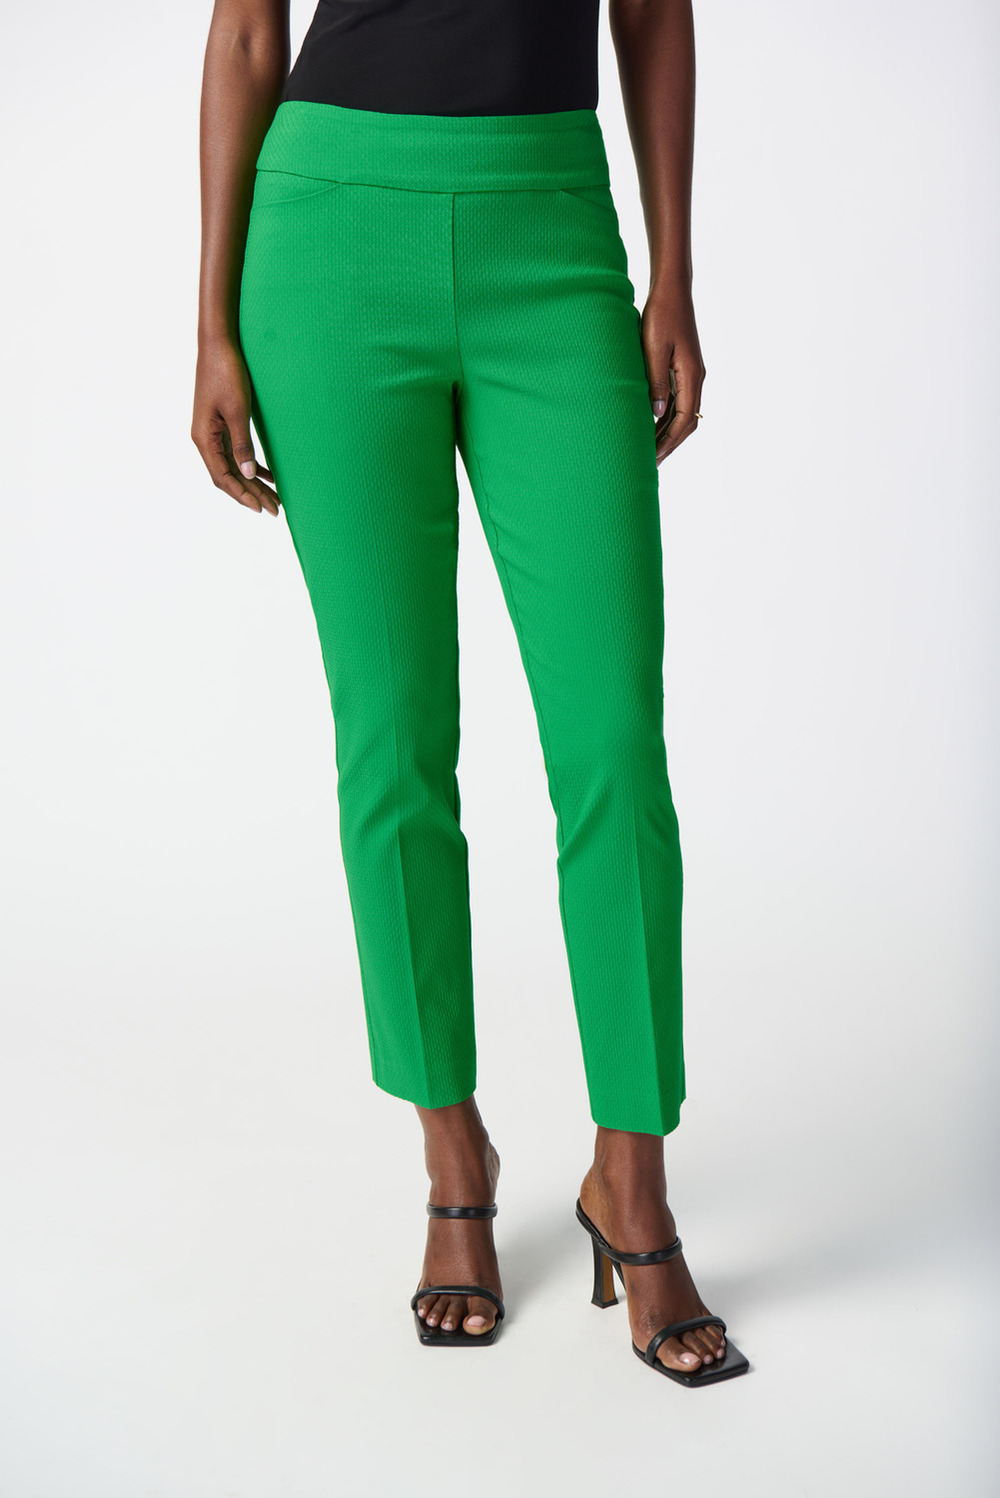 Pantalon ajusté, fine texture modèle 241229. Island Green